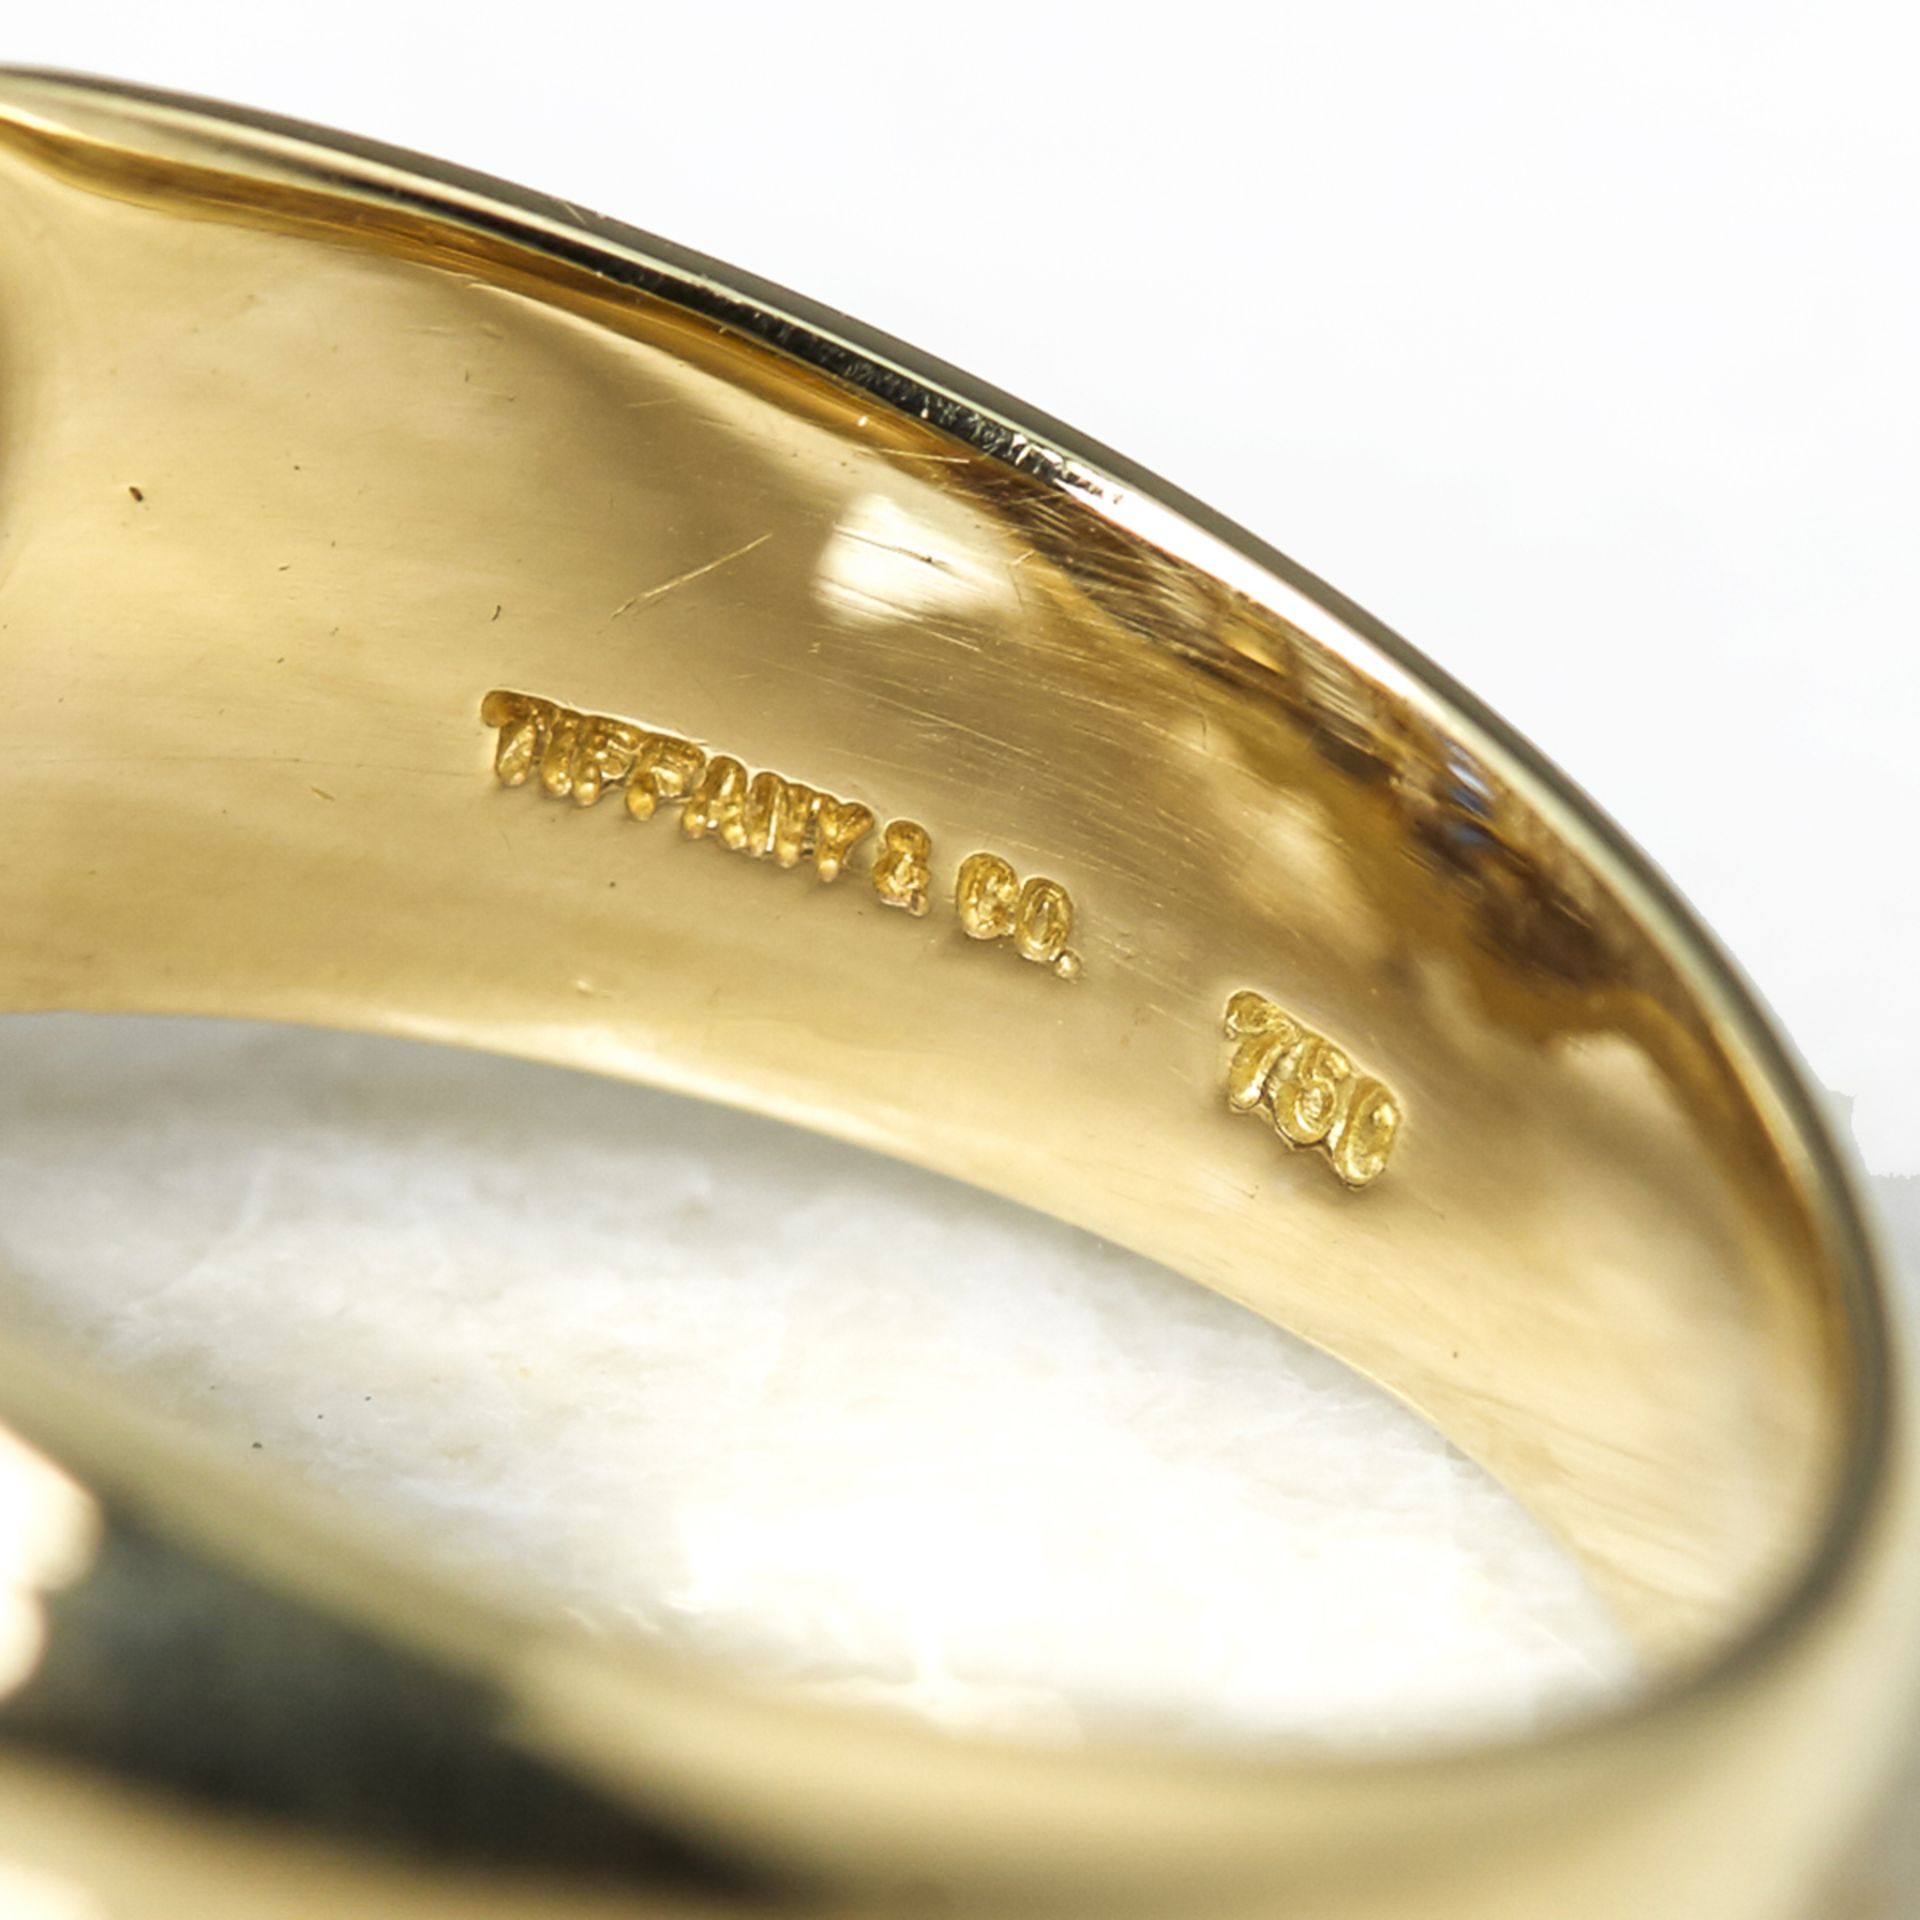 Tiffany & Co. 18k Yellow Gold 0.75ct Sapphire & 1.10ct Diamond Ring - Image 5 of 5